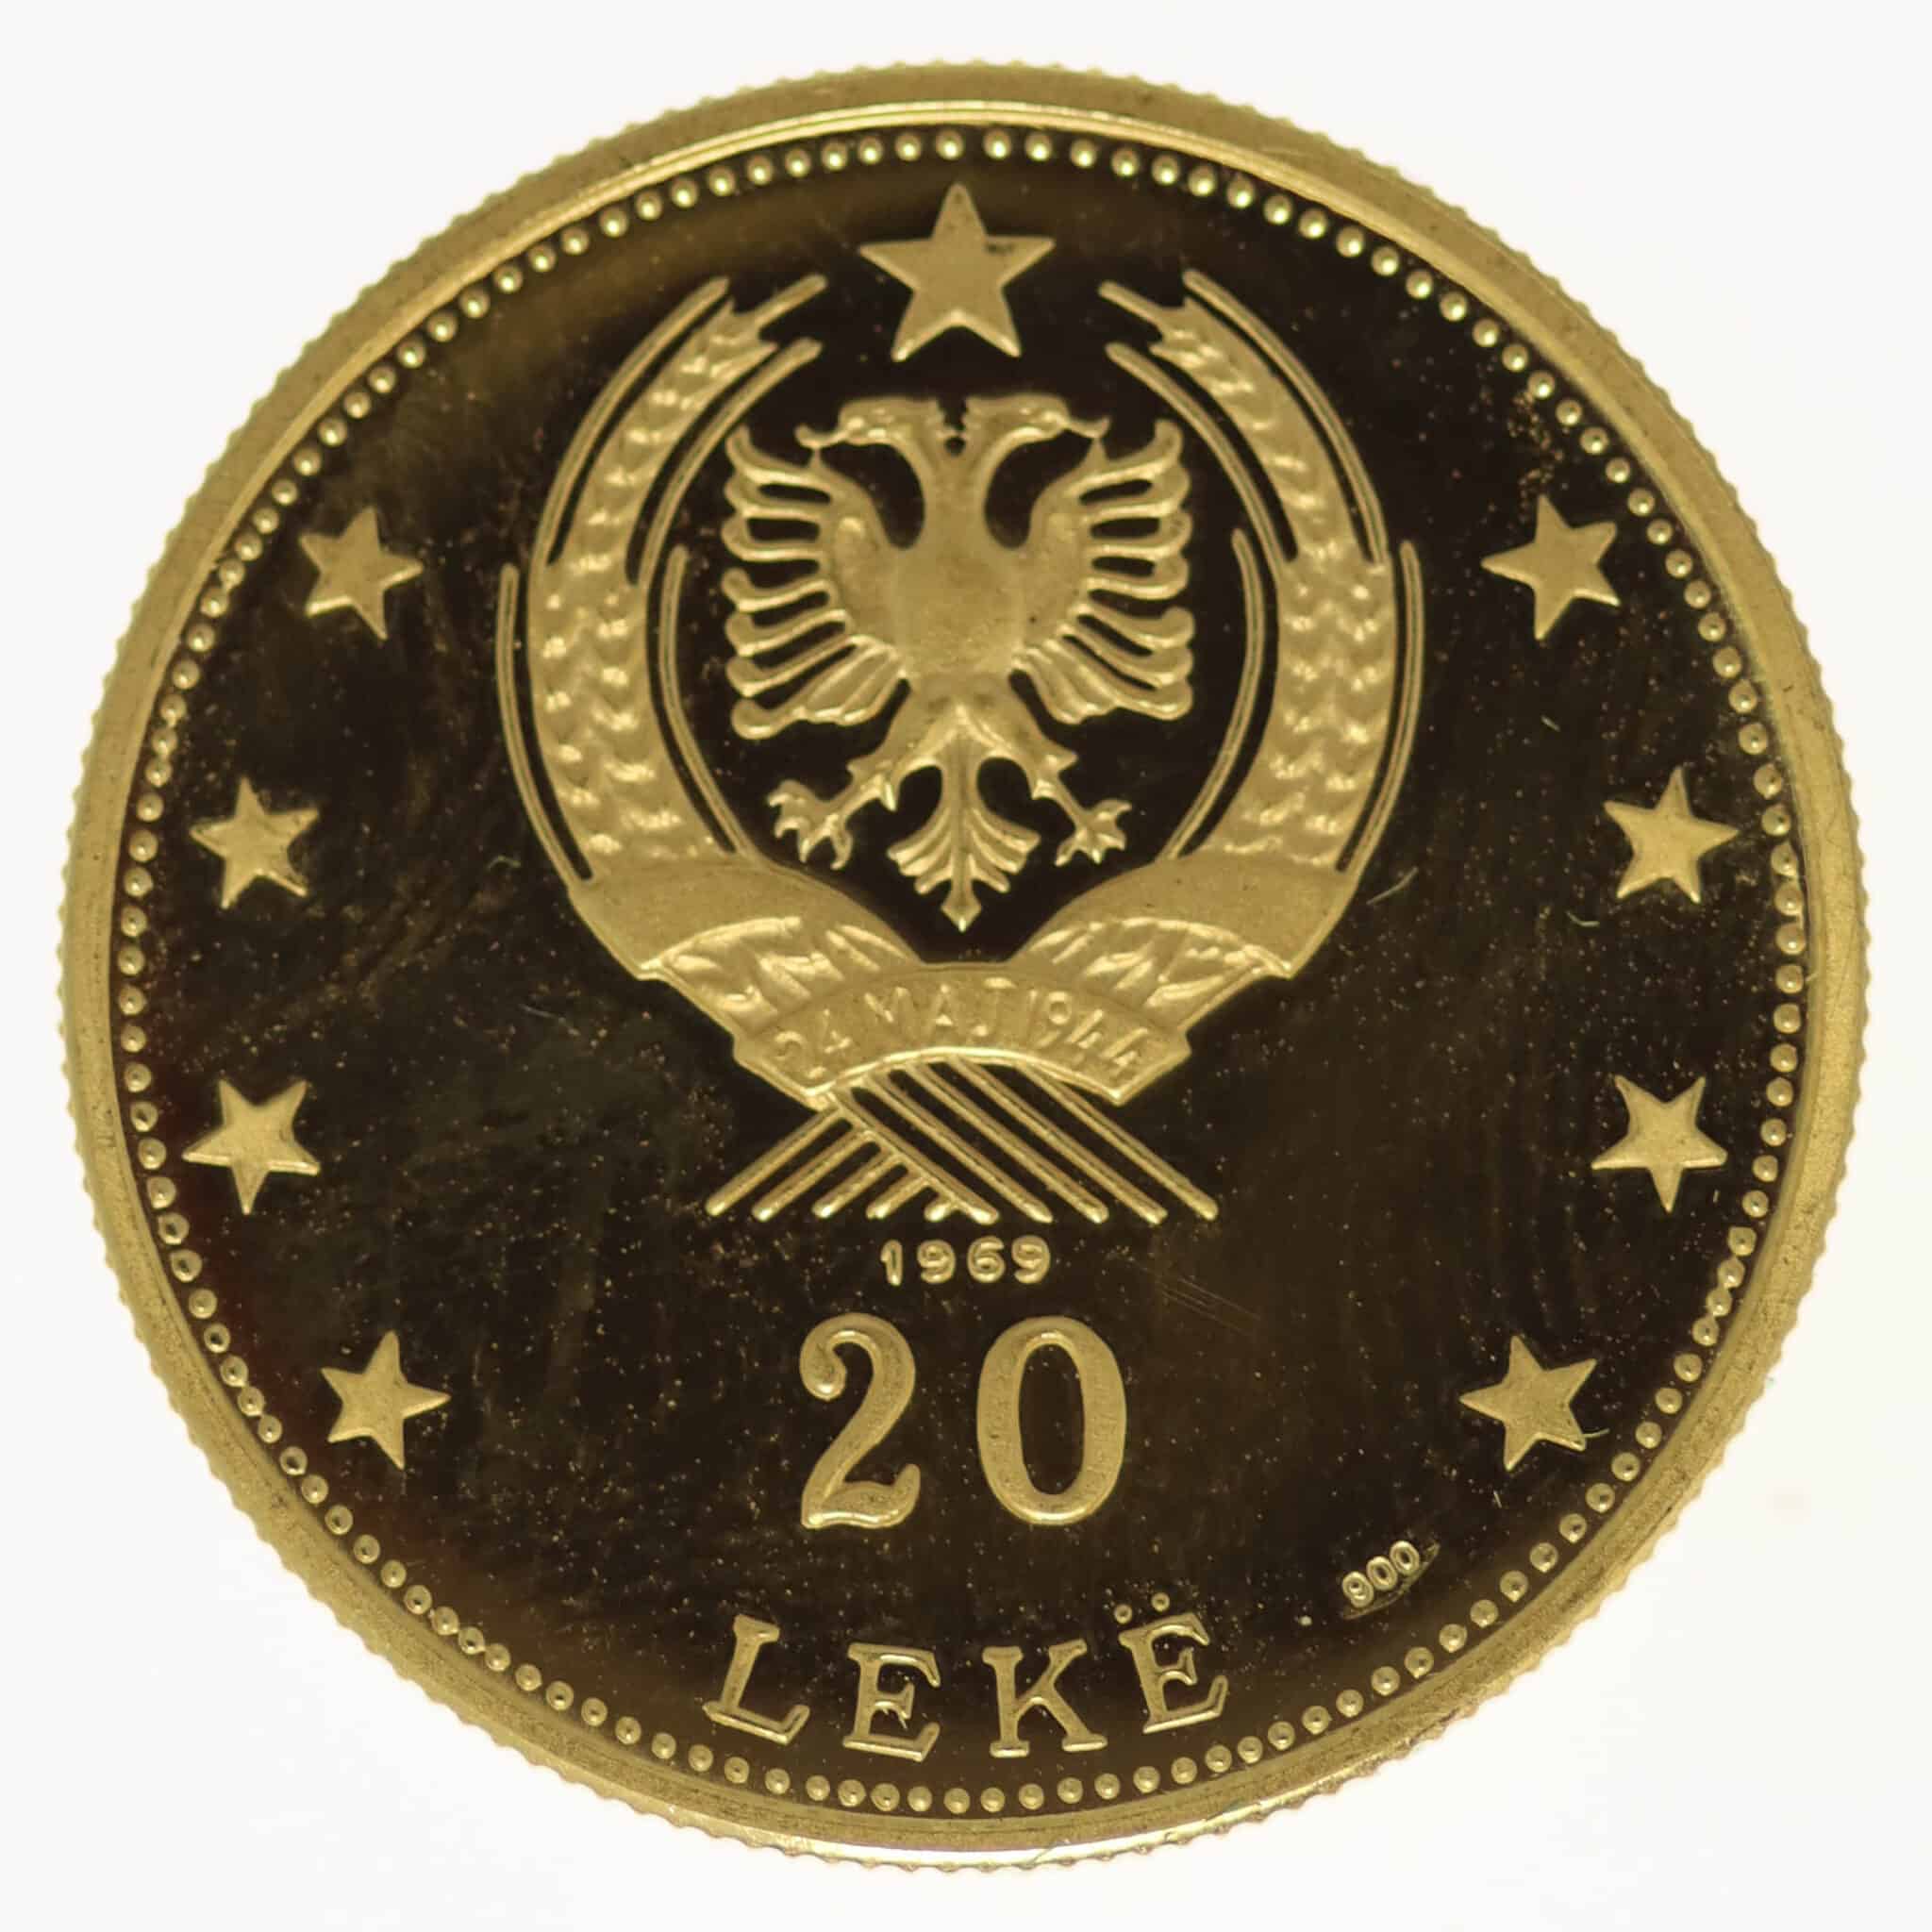 albanien - Albanien 20 Leke 1969